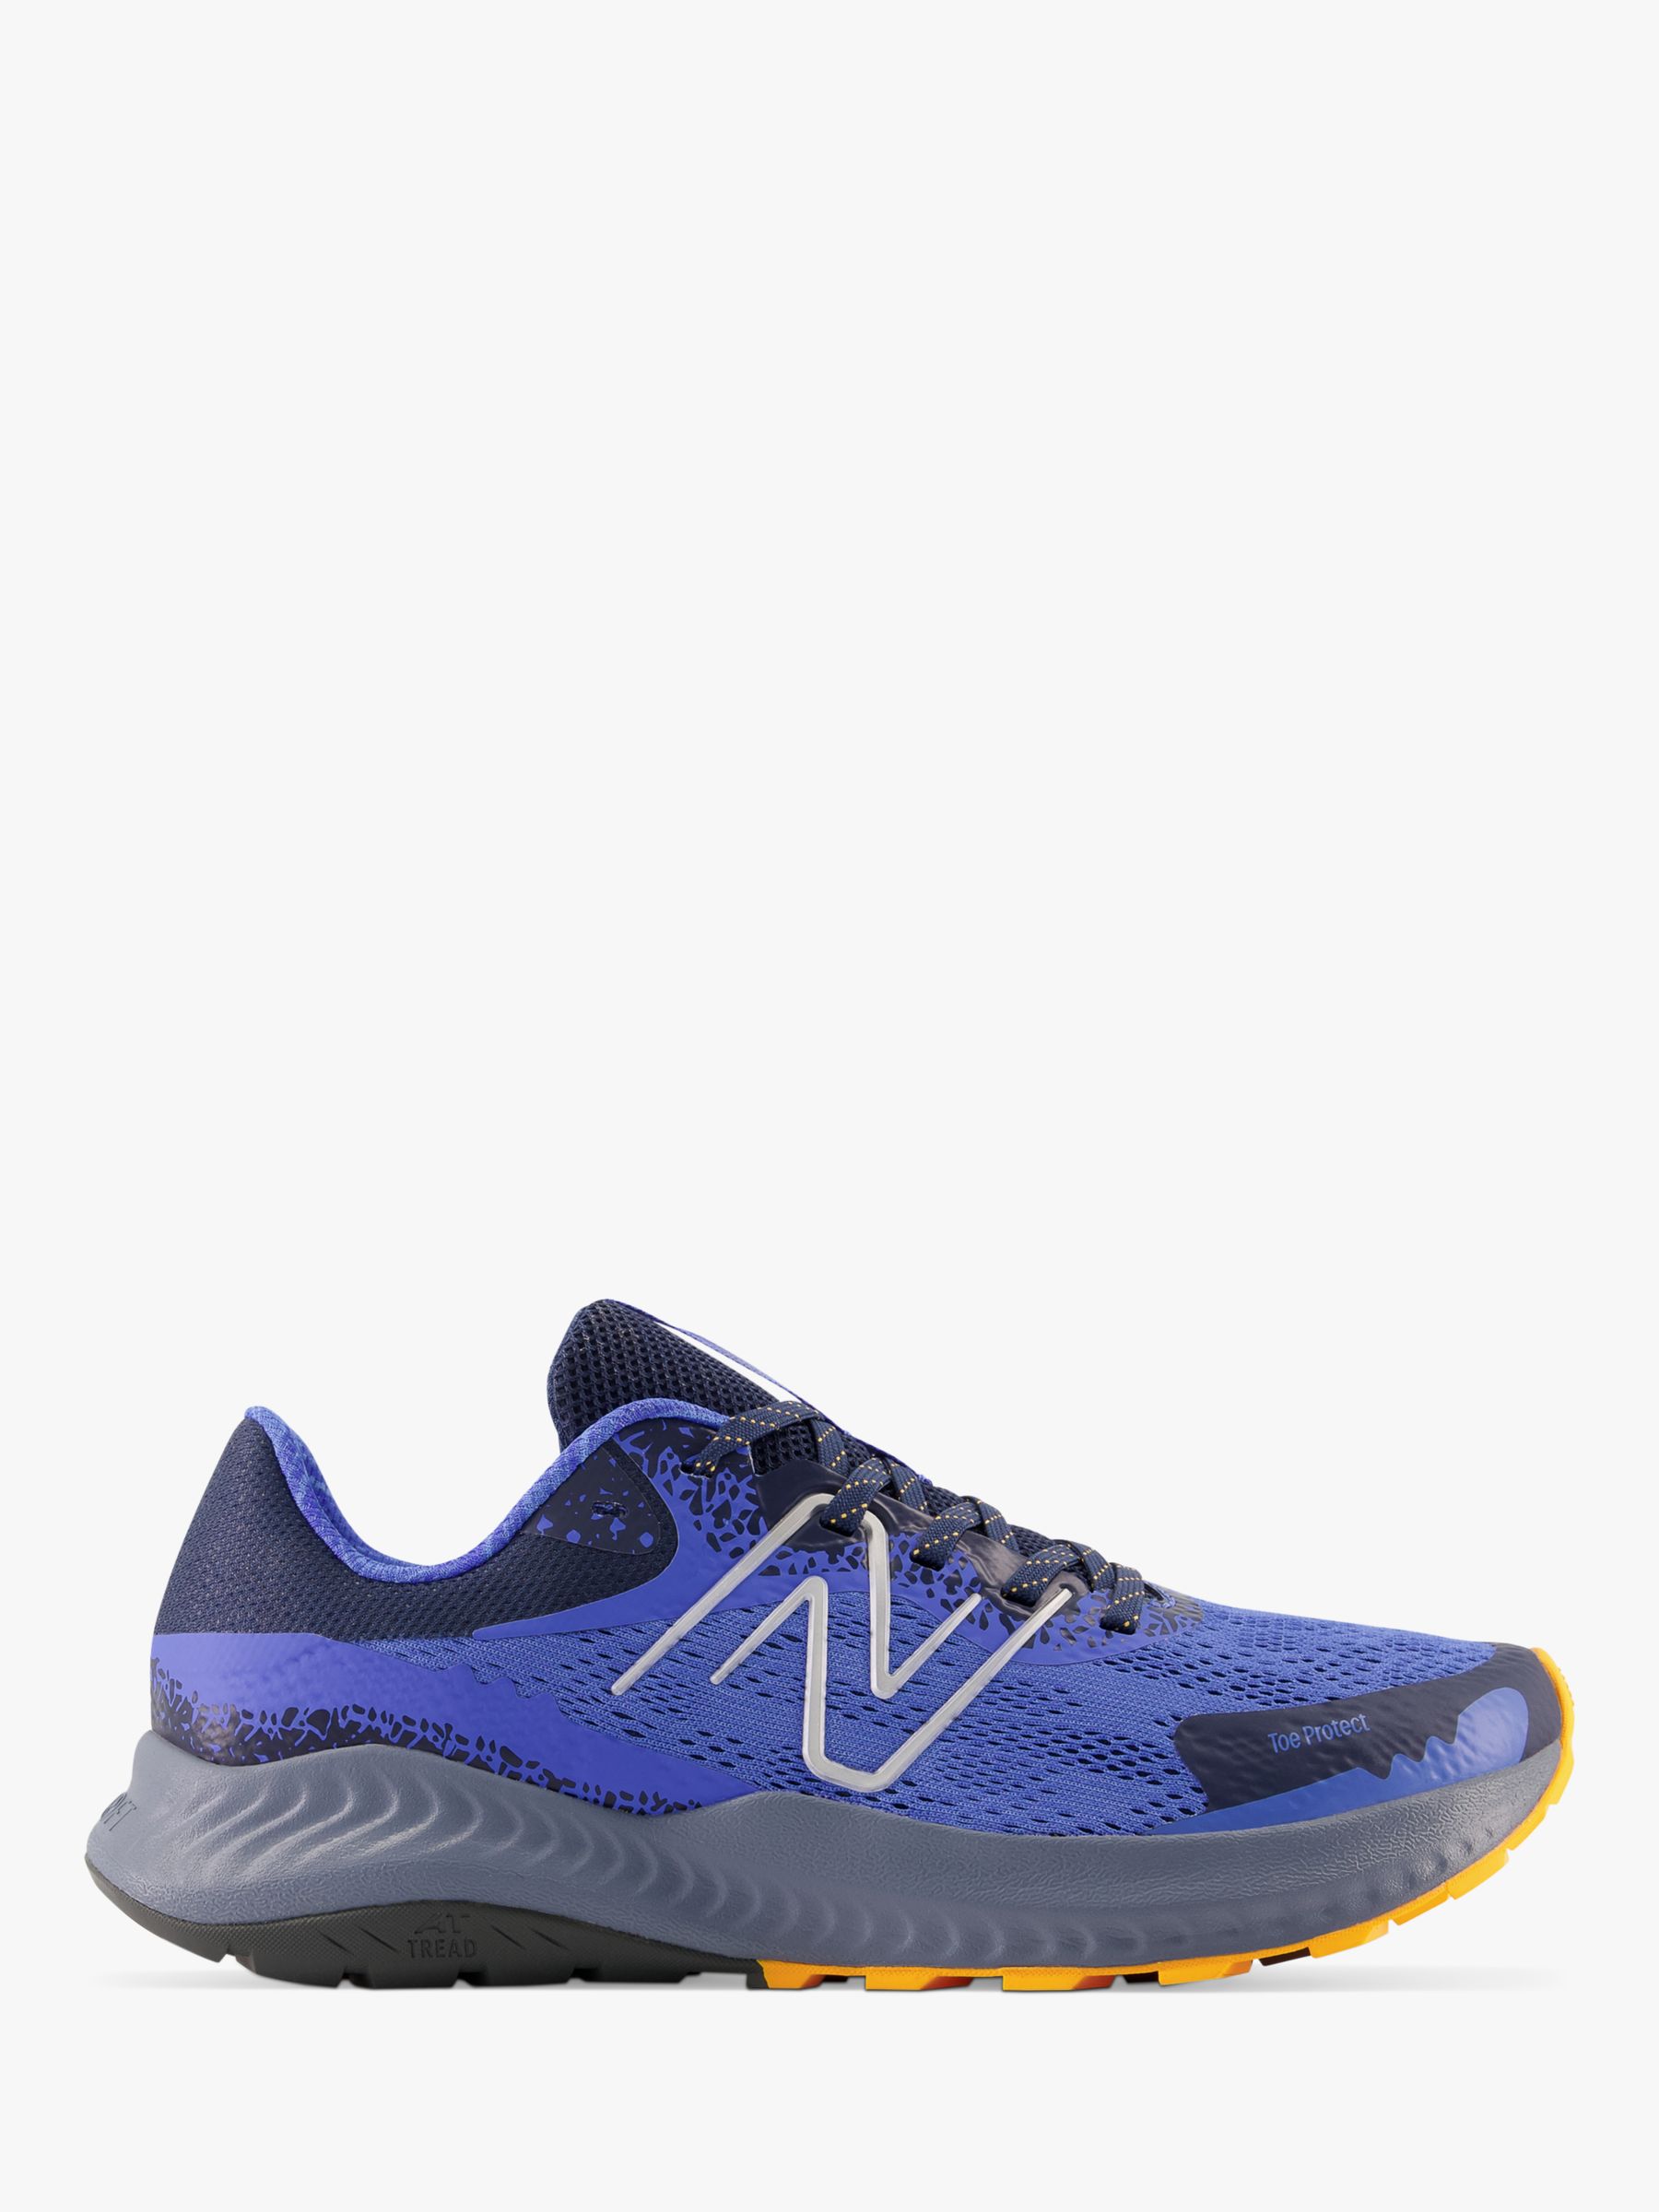 New Balance NITRELv5 Men's Trail Running Shoes